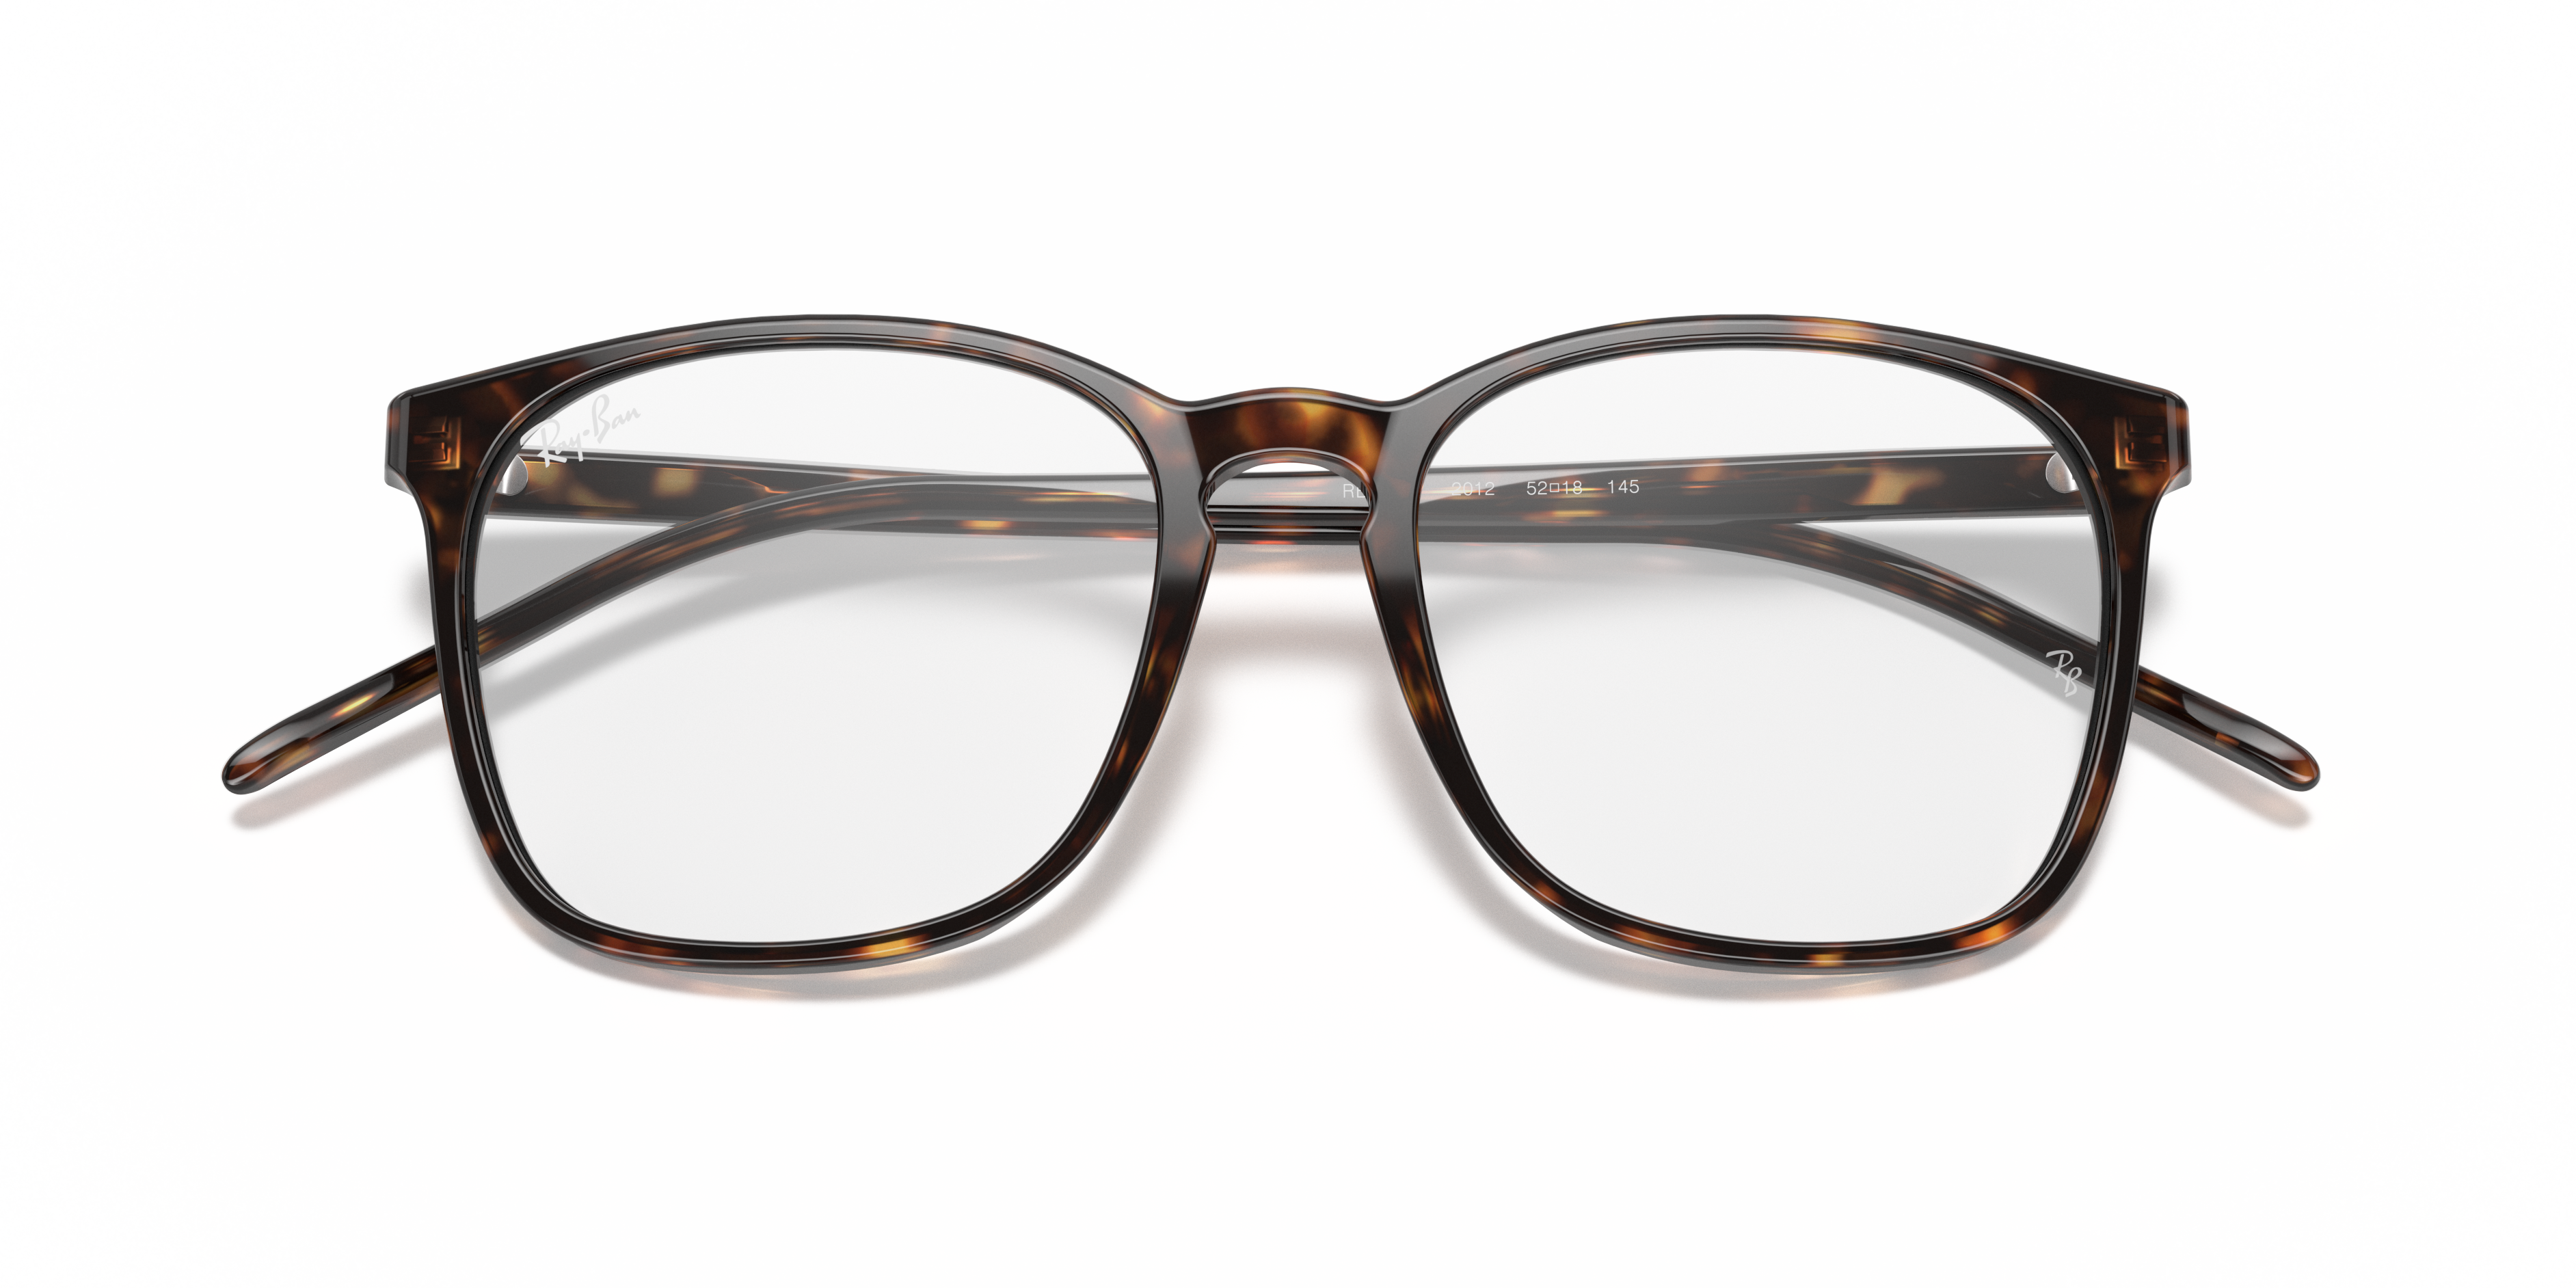 Rb5387 Eyeglasses with Tortoise Frame | Ray-Ban®